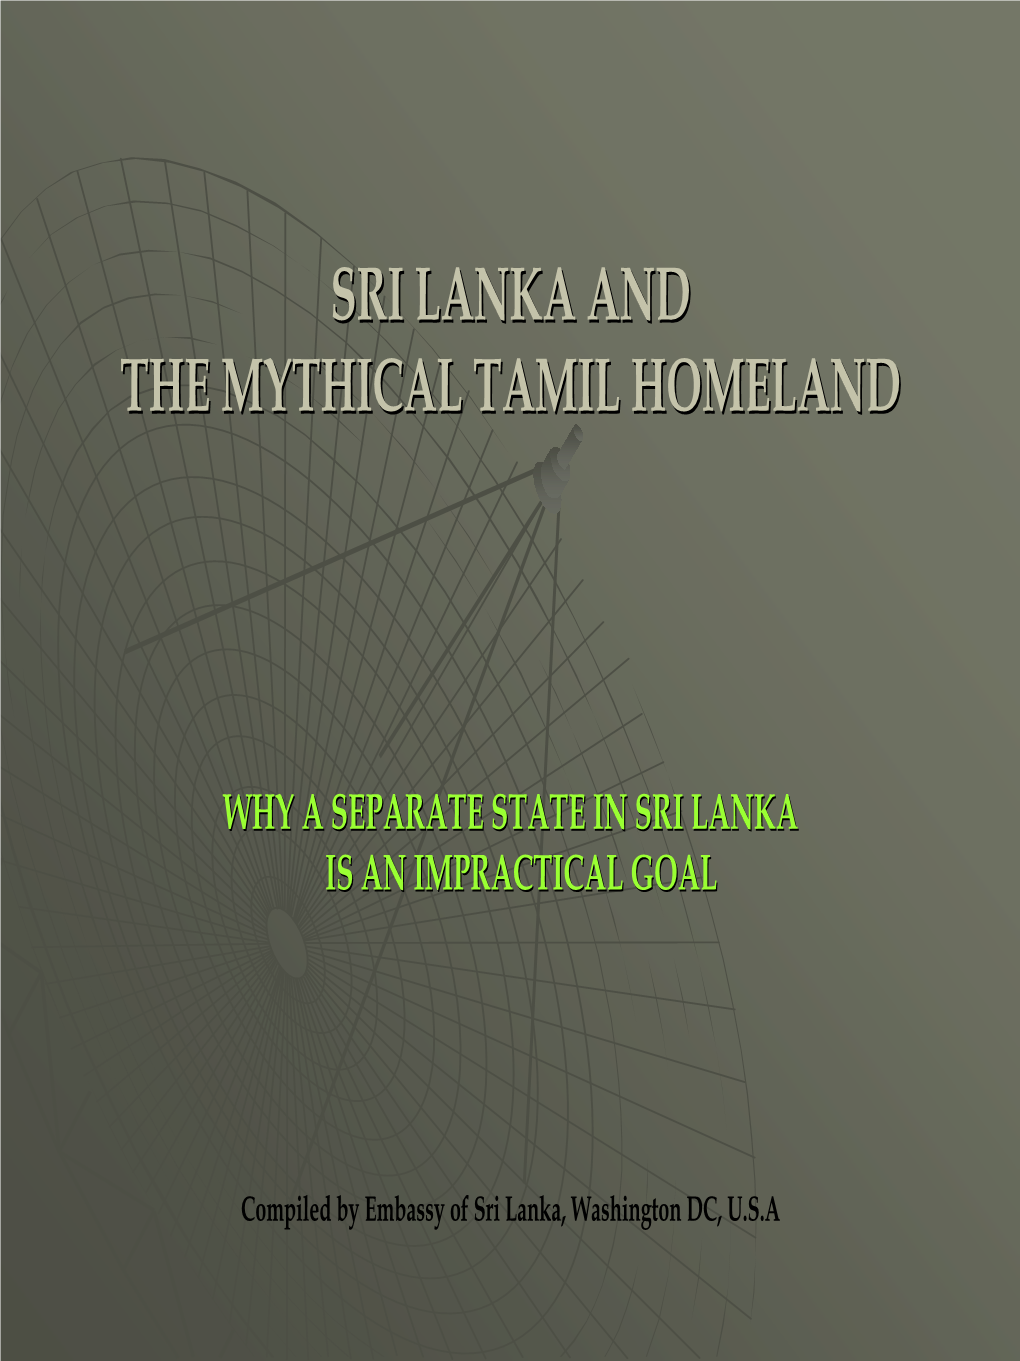 Sri Lanka and the Mythical Tamil Homeland